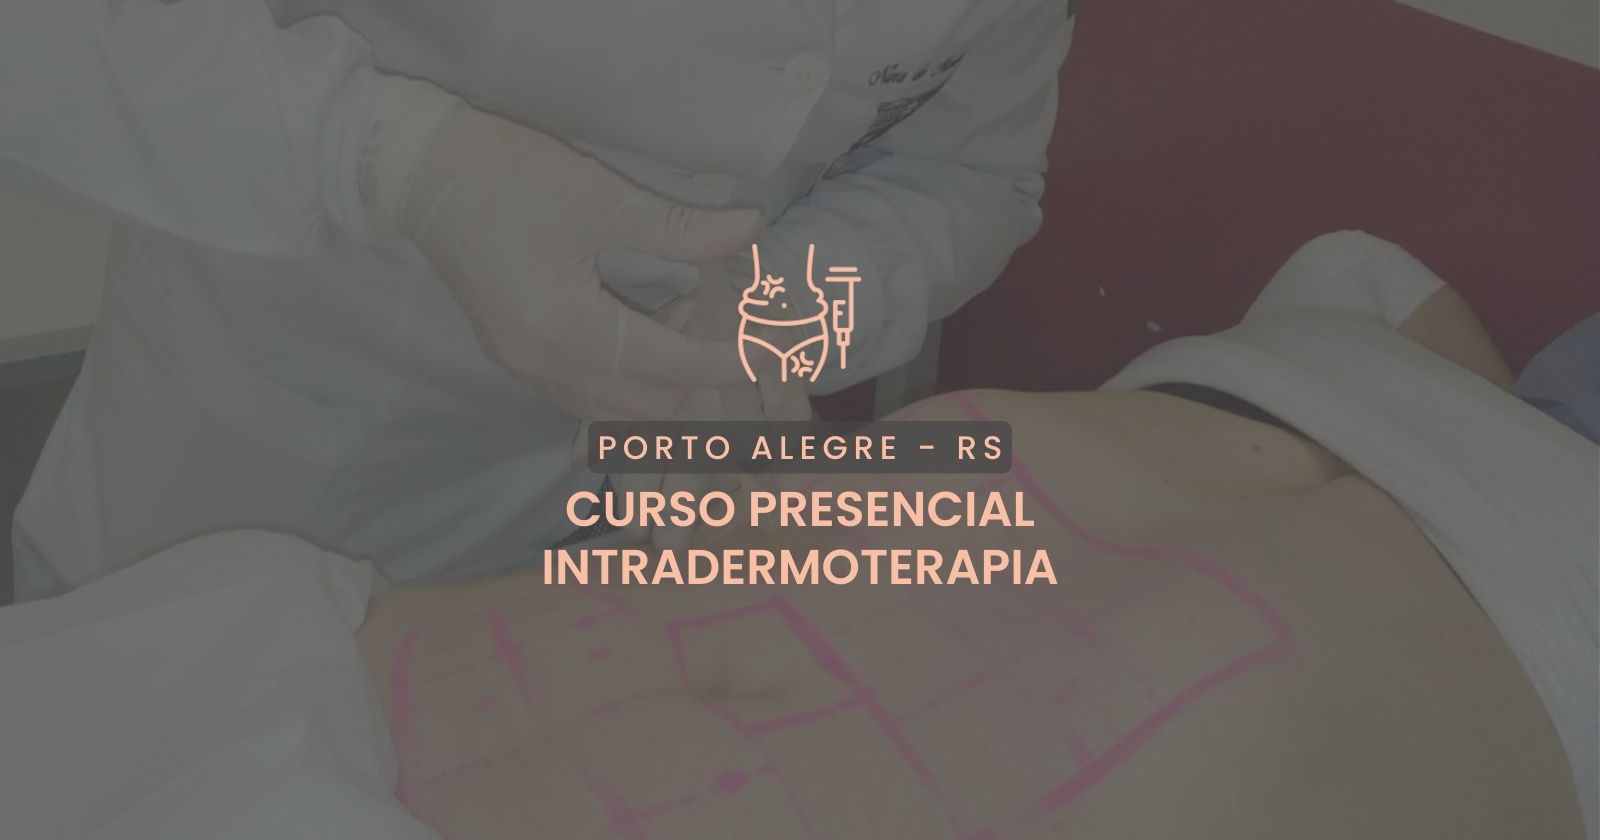 Curso presencial - Intradermoterapia Porto Alegre